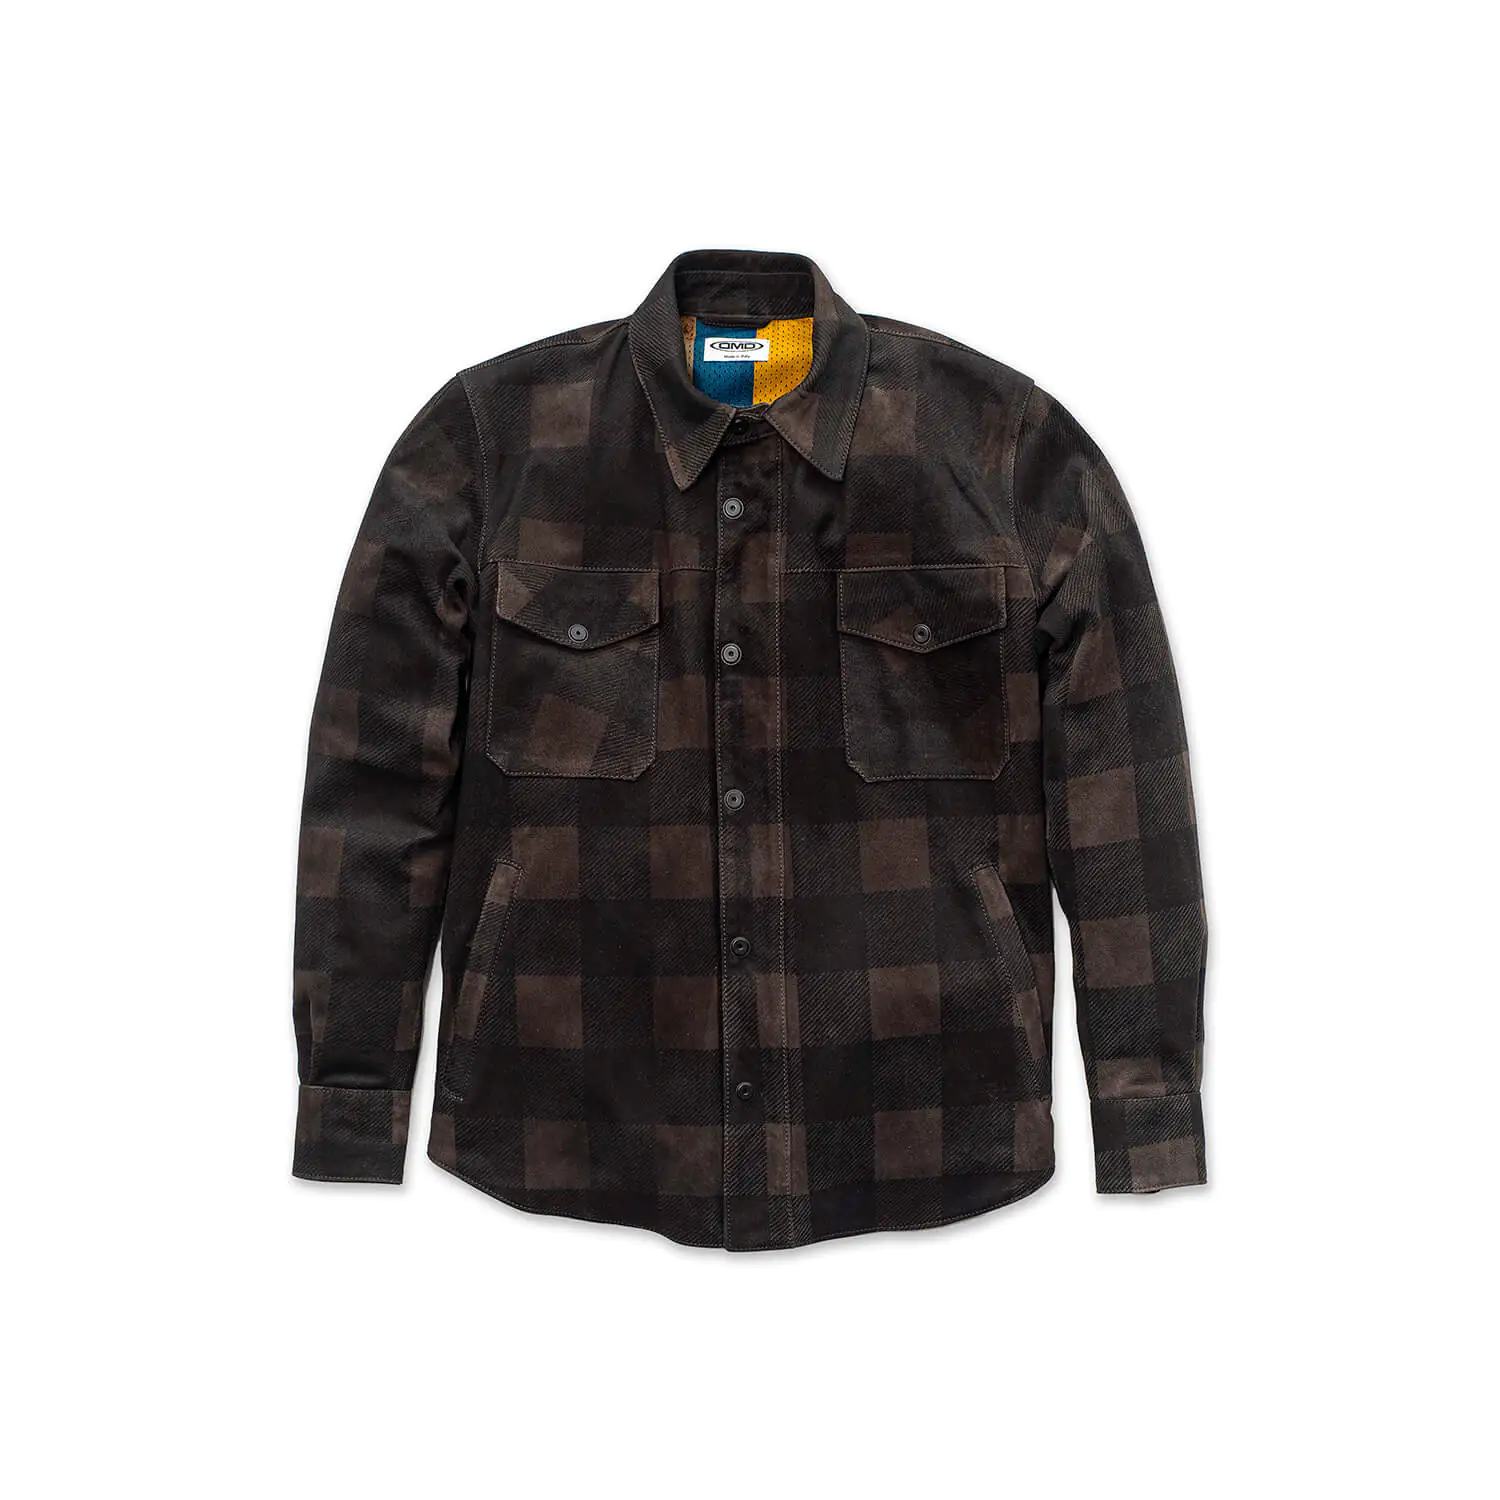 dmd.eu - SHIRT CHECK BROWN DMD – Shirt check brown leather – front